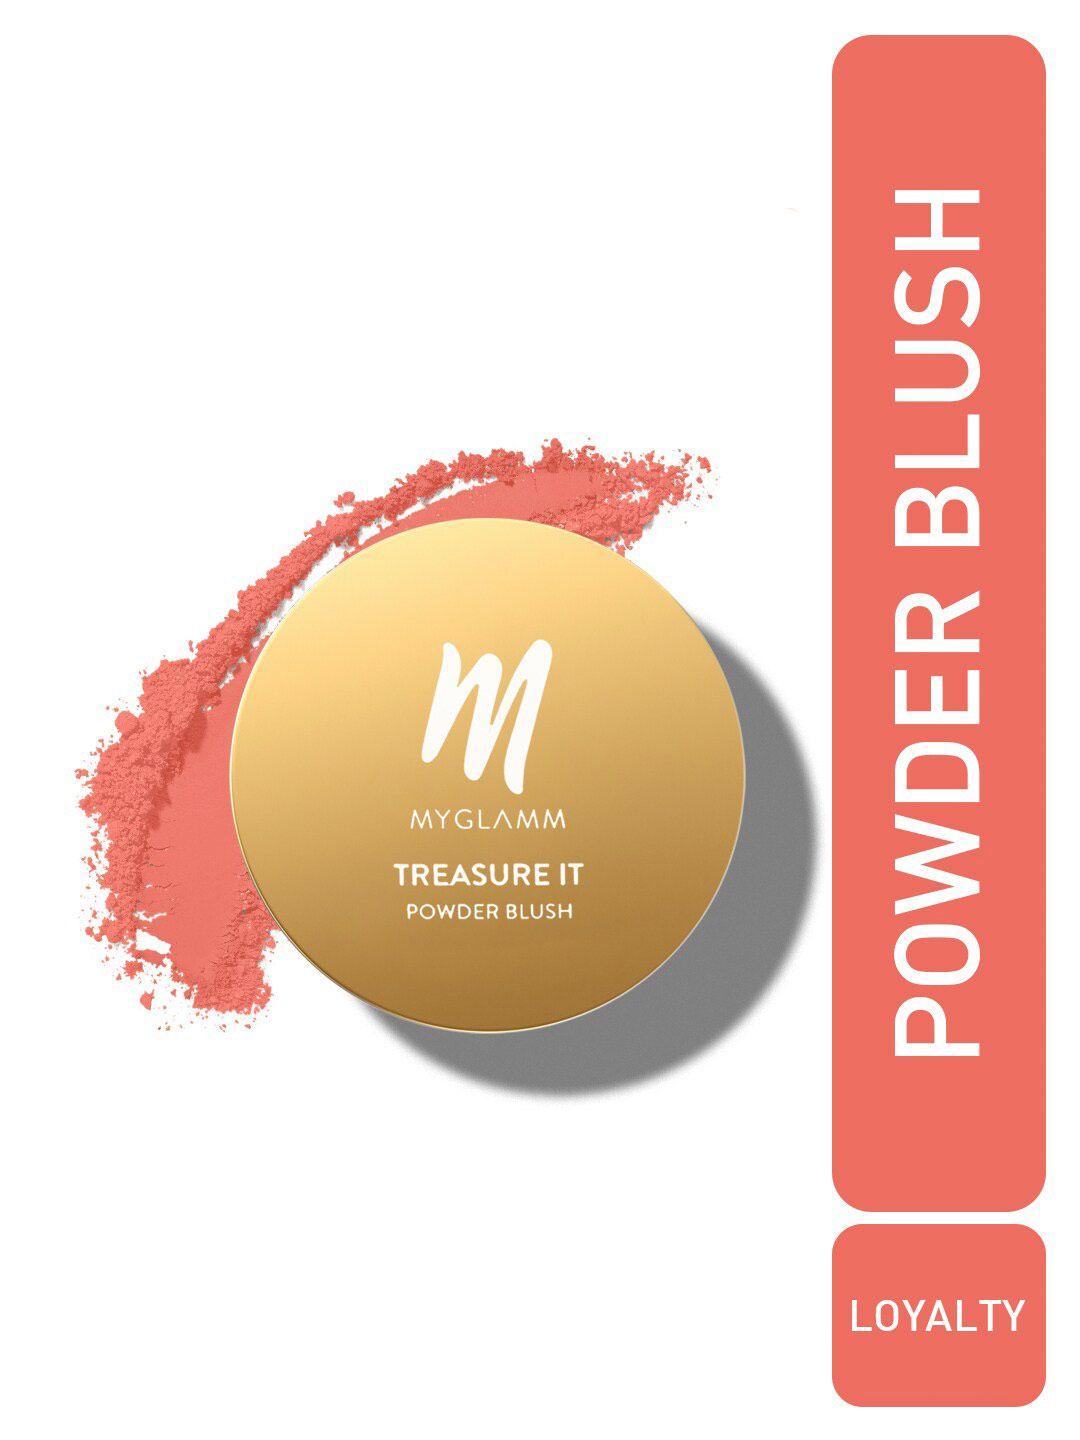 myglamm treasure it powder matte blush - 4g - loyalty